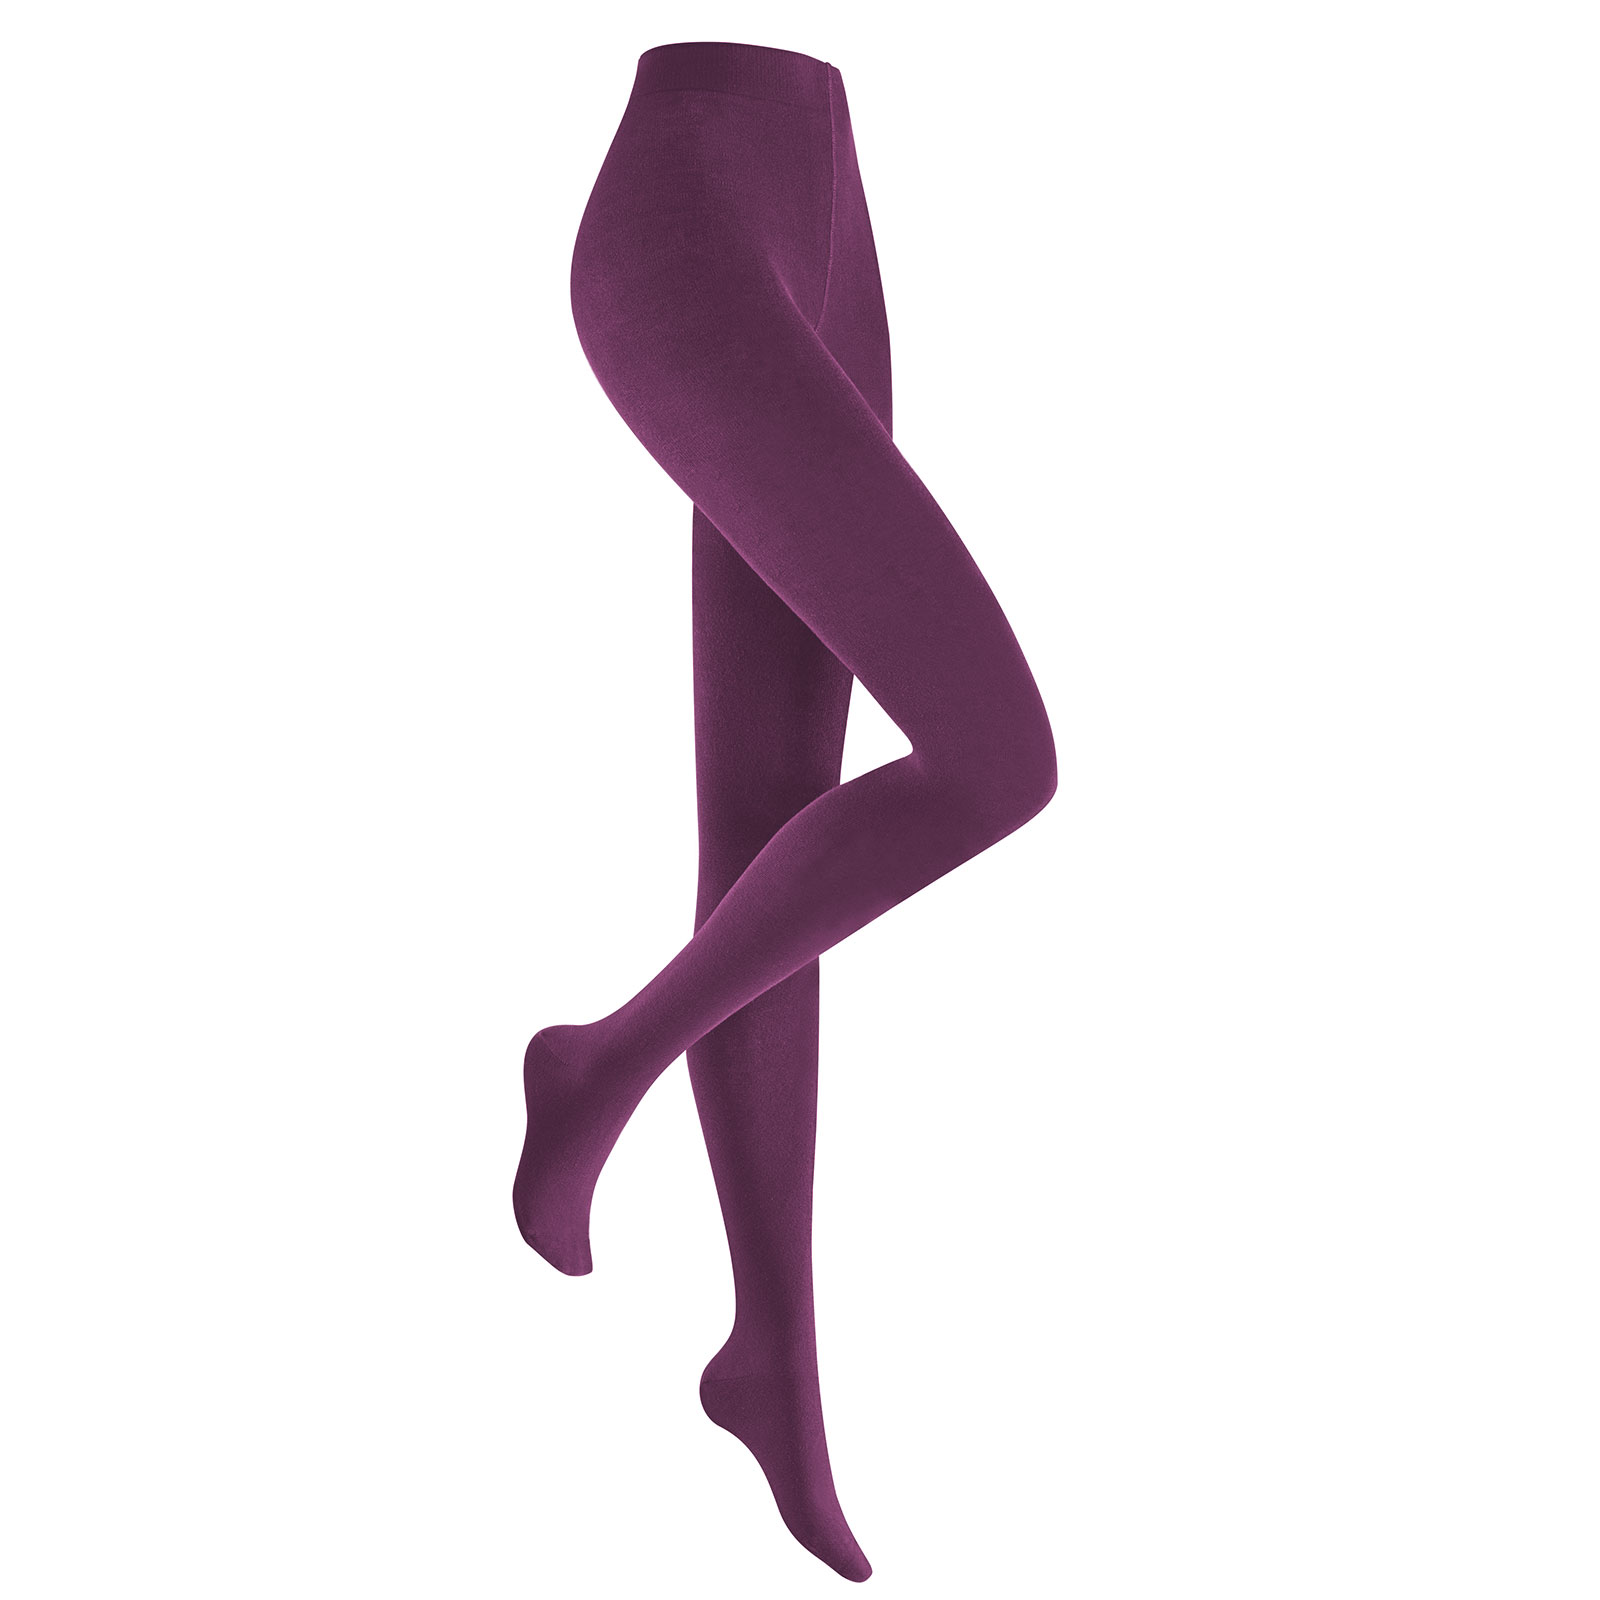 HUDSON Damen RELAX FINE  -  44/46 - Blickdichte Strumpfhose / Strickstrumpfhose mit hohem Baumwollanteil - Sweet lilac (Pink/Violett)